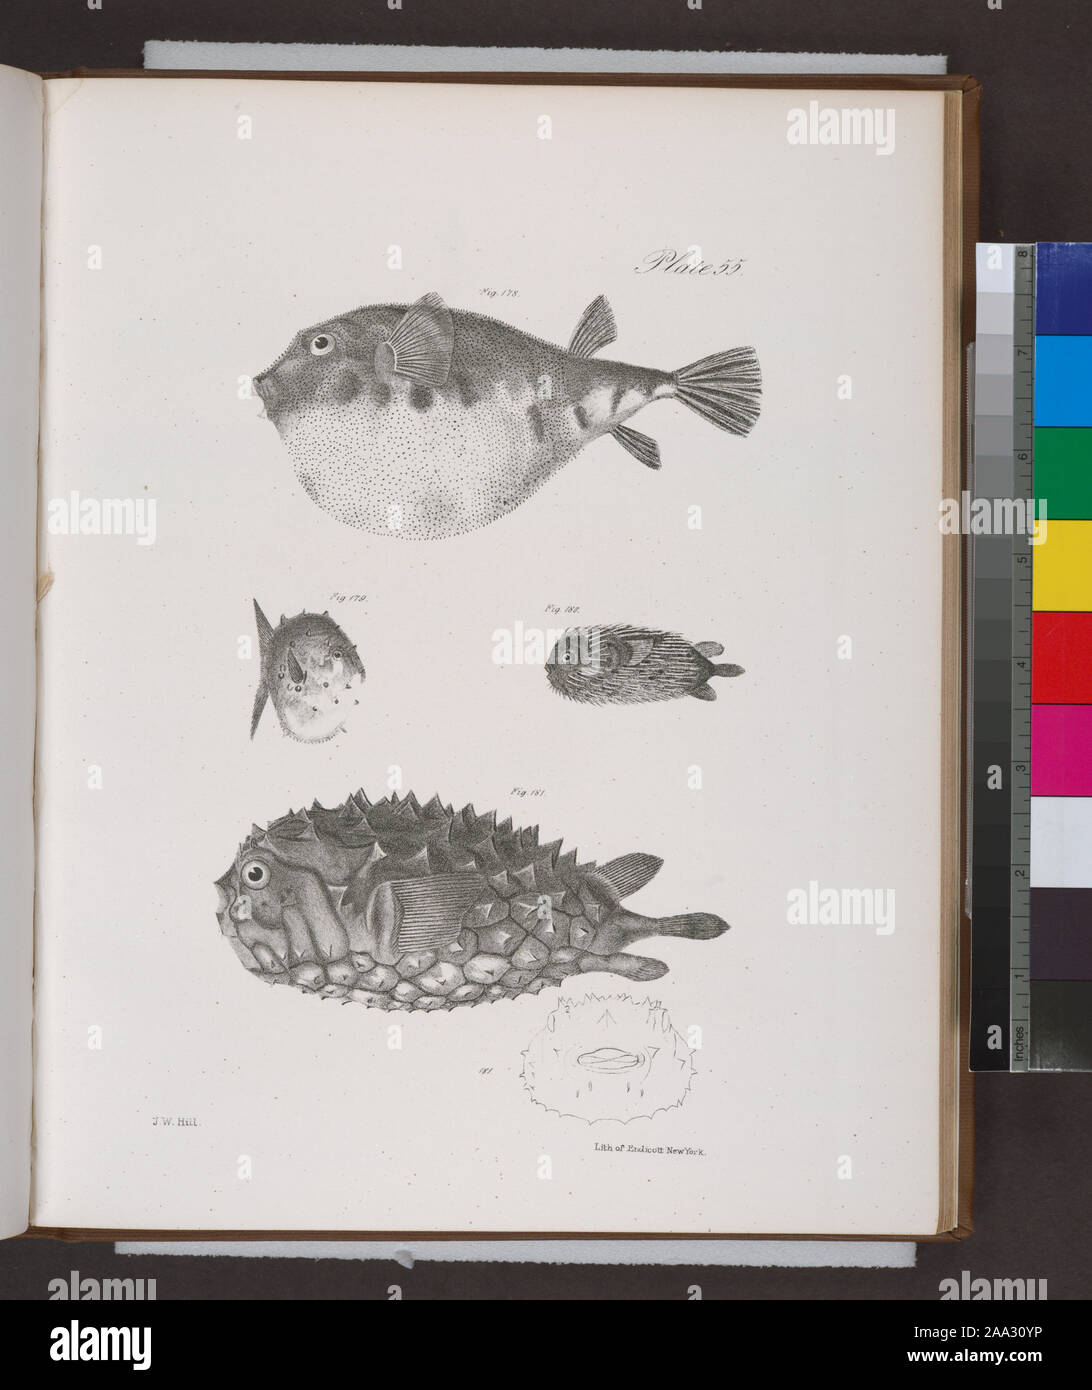 178. The Common Puffer (Tetraodon turgidus). 179. The Small Globe-fish (Acanthosoma catinatum). 180. The Hairy Balloon-fish (Diodon pilosus). 181. The Unspoted Balloon-fish (D. fuliginosus).; 178. The Common Puffer (Tetraodon turgidus). 179. The Small Globe-fish (Acanthosoma catinatum). 180. The Hairy Balloon-fish (Diodon pilosus). 181. The Unspoted Balloon-fish (D. fuliginosus). Stock Photo